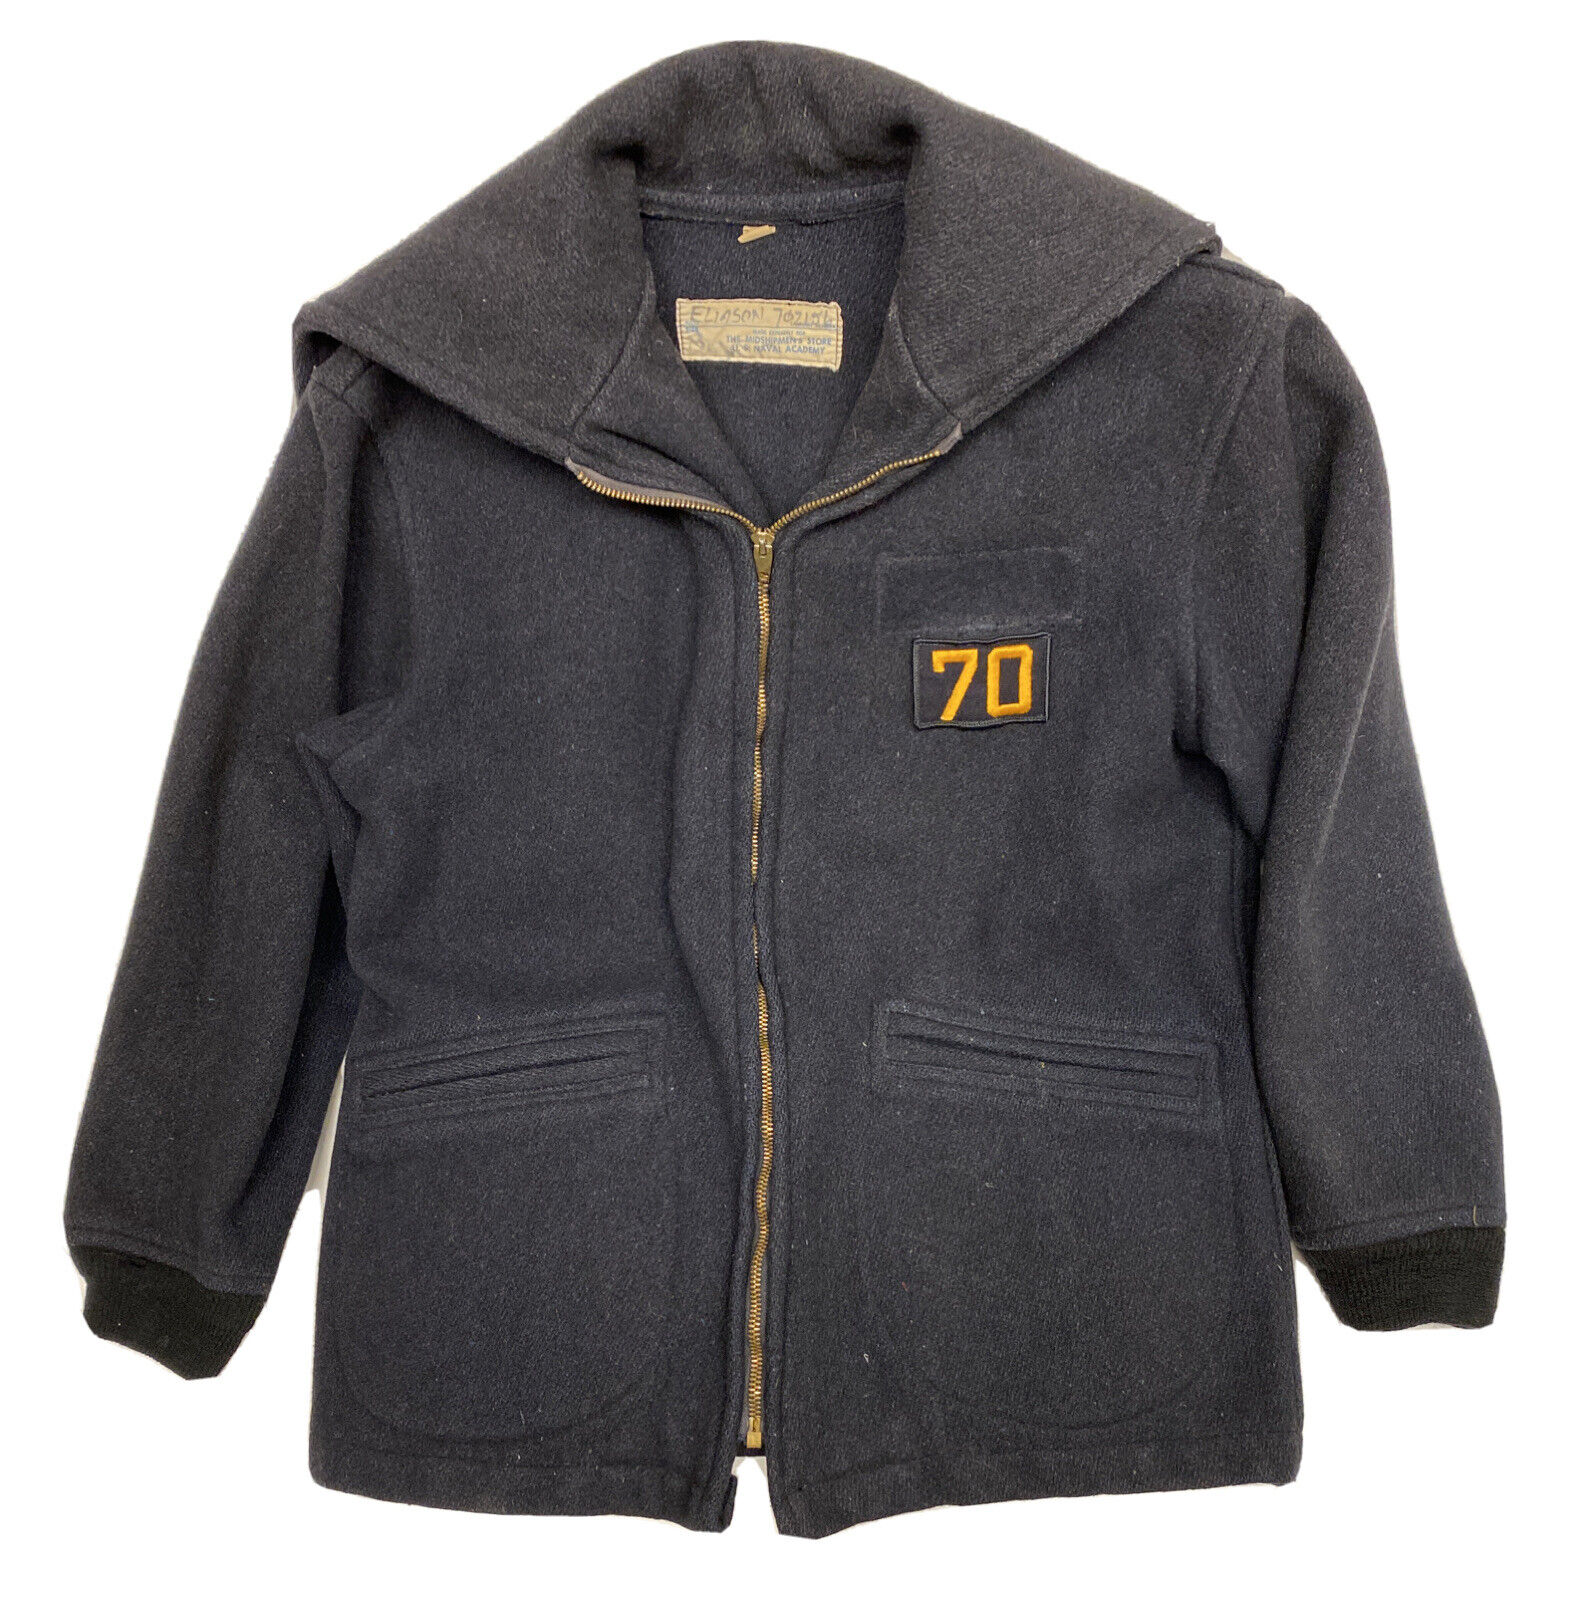 1970 Midshipman US Naval Academy USNA Wool Jacket men’s Size Medium Zip Hood